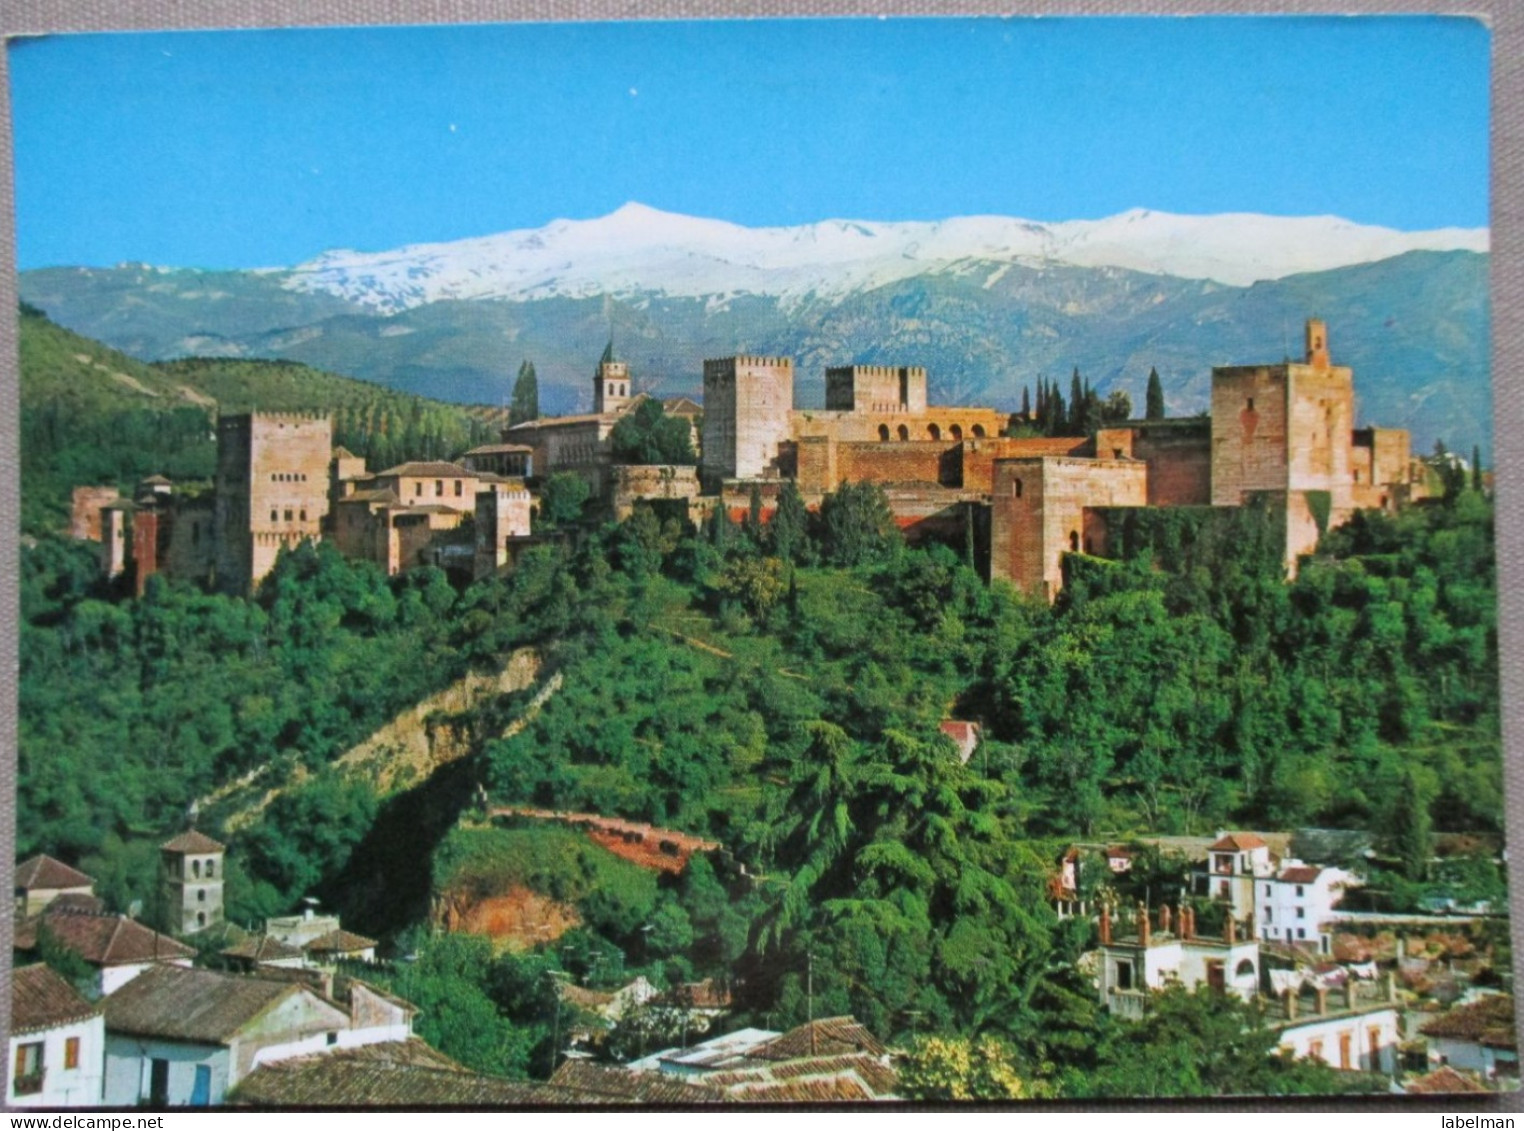 SPAIN SPAGNE ANDALUCIA GRANADA ALHAMBRA PALACE GARDEN TARJETA POSTAL POSTCARD ANSICHTSKARTE CARTEM POSTALE CARTOLINA - Segovia